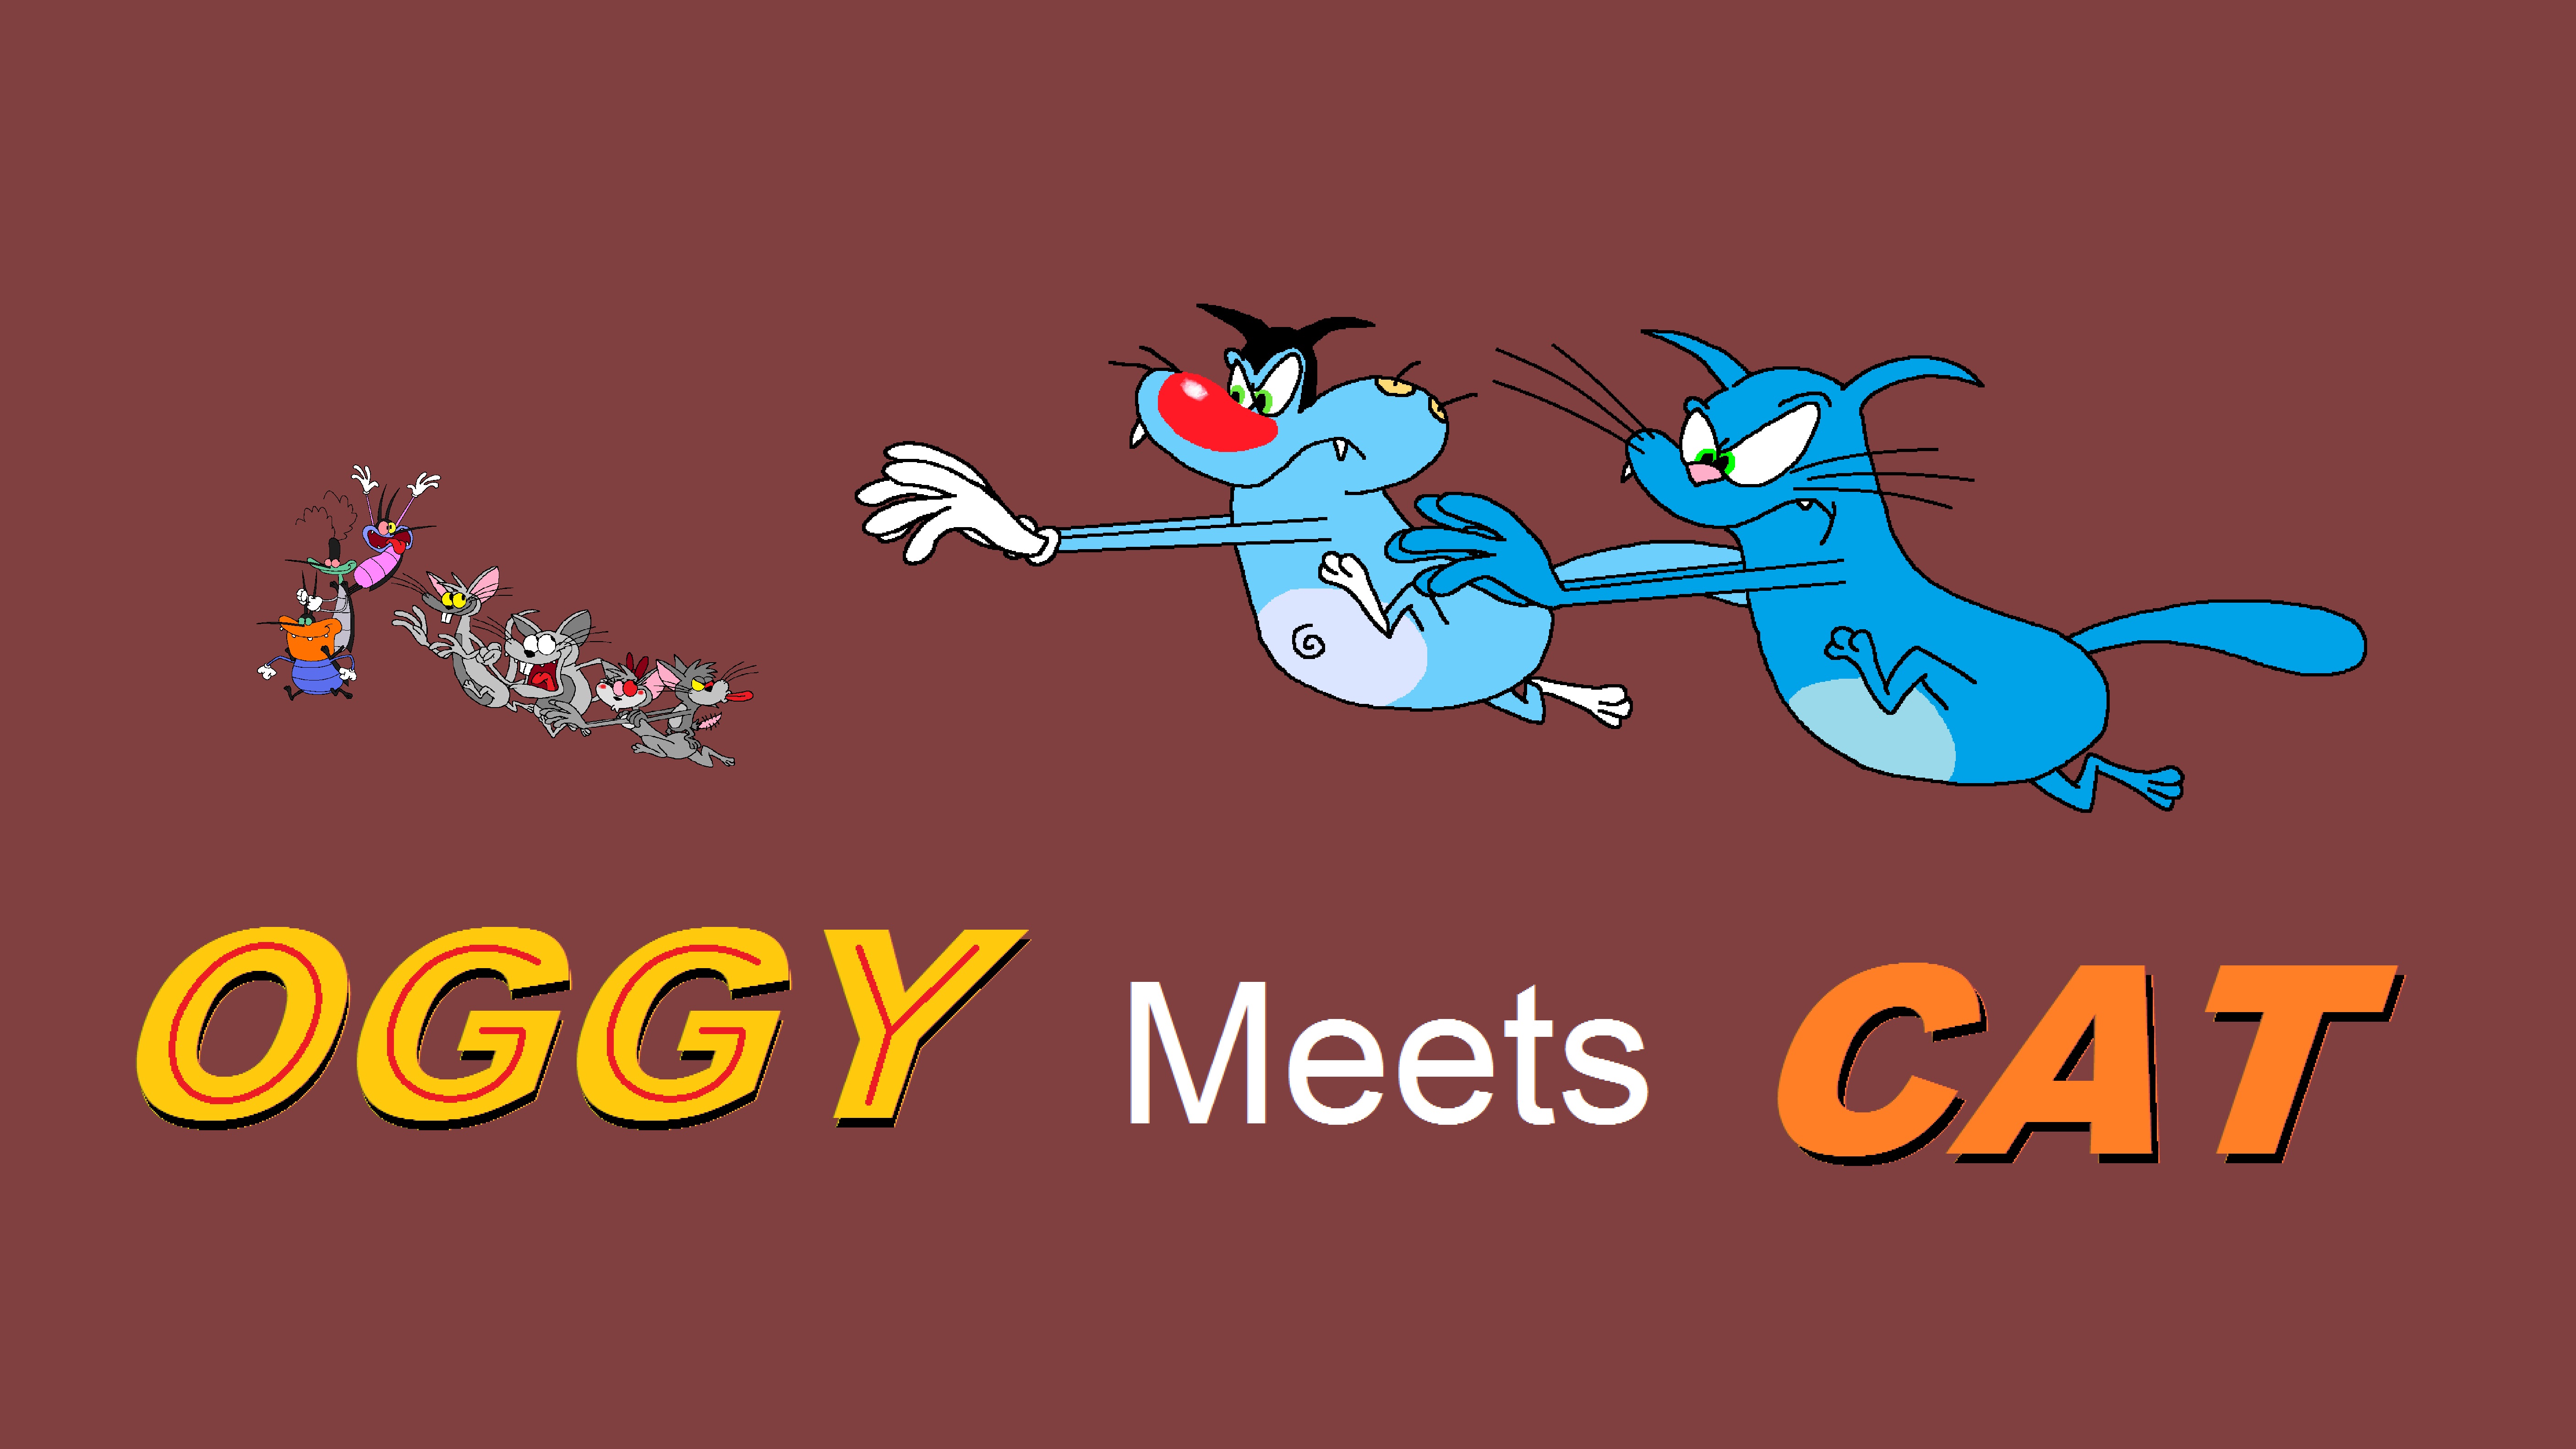 Oggy meets Cat by BlueCat98 on DeviantArt